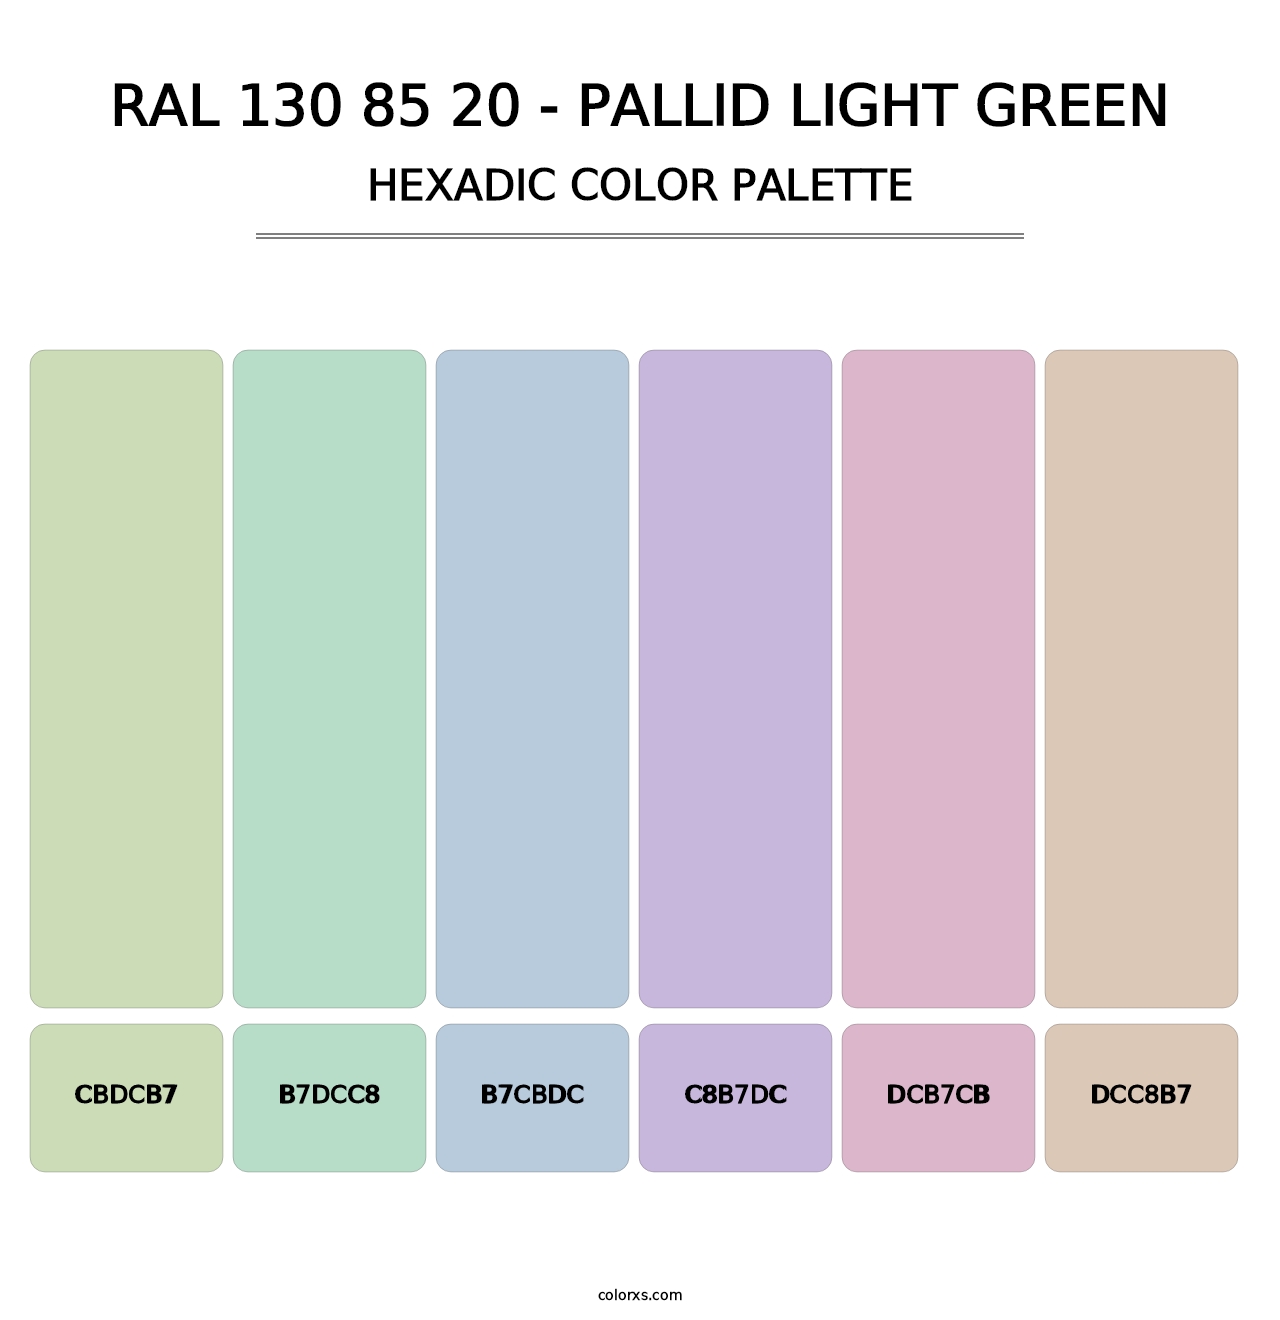 RAL 130 85 20 - Pallid Light Green - Hexadic Color Palette